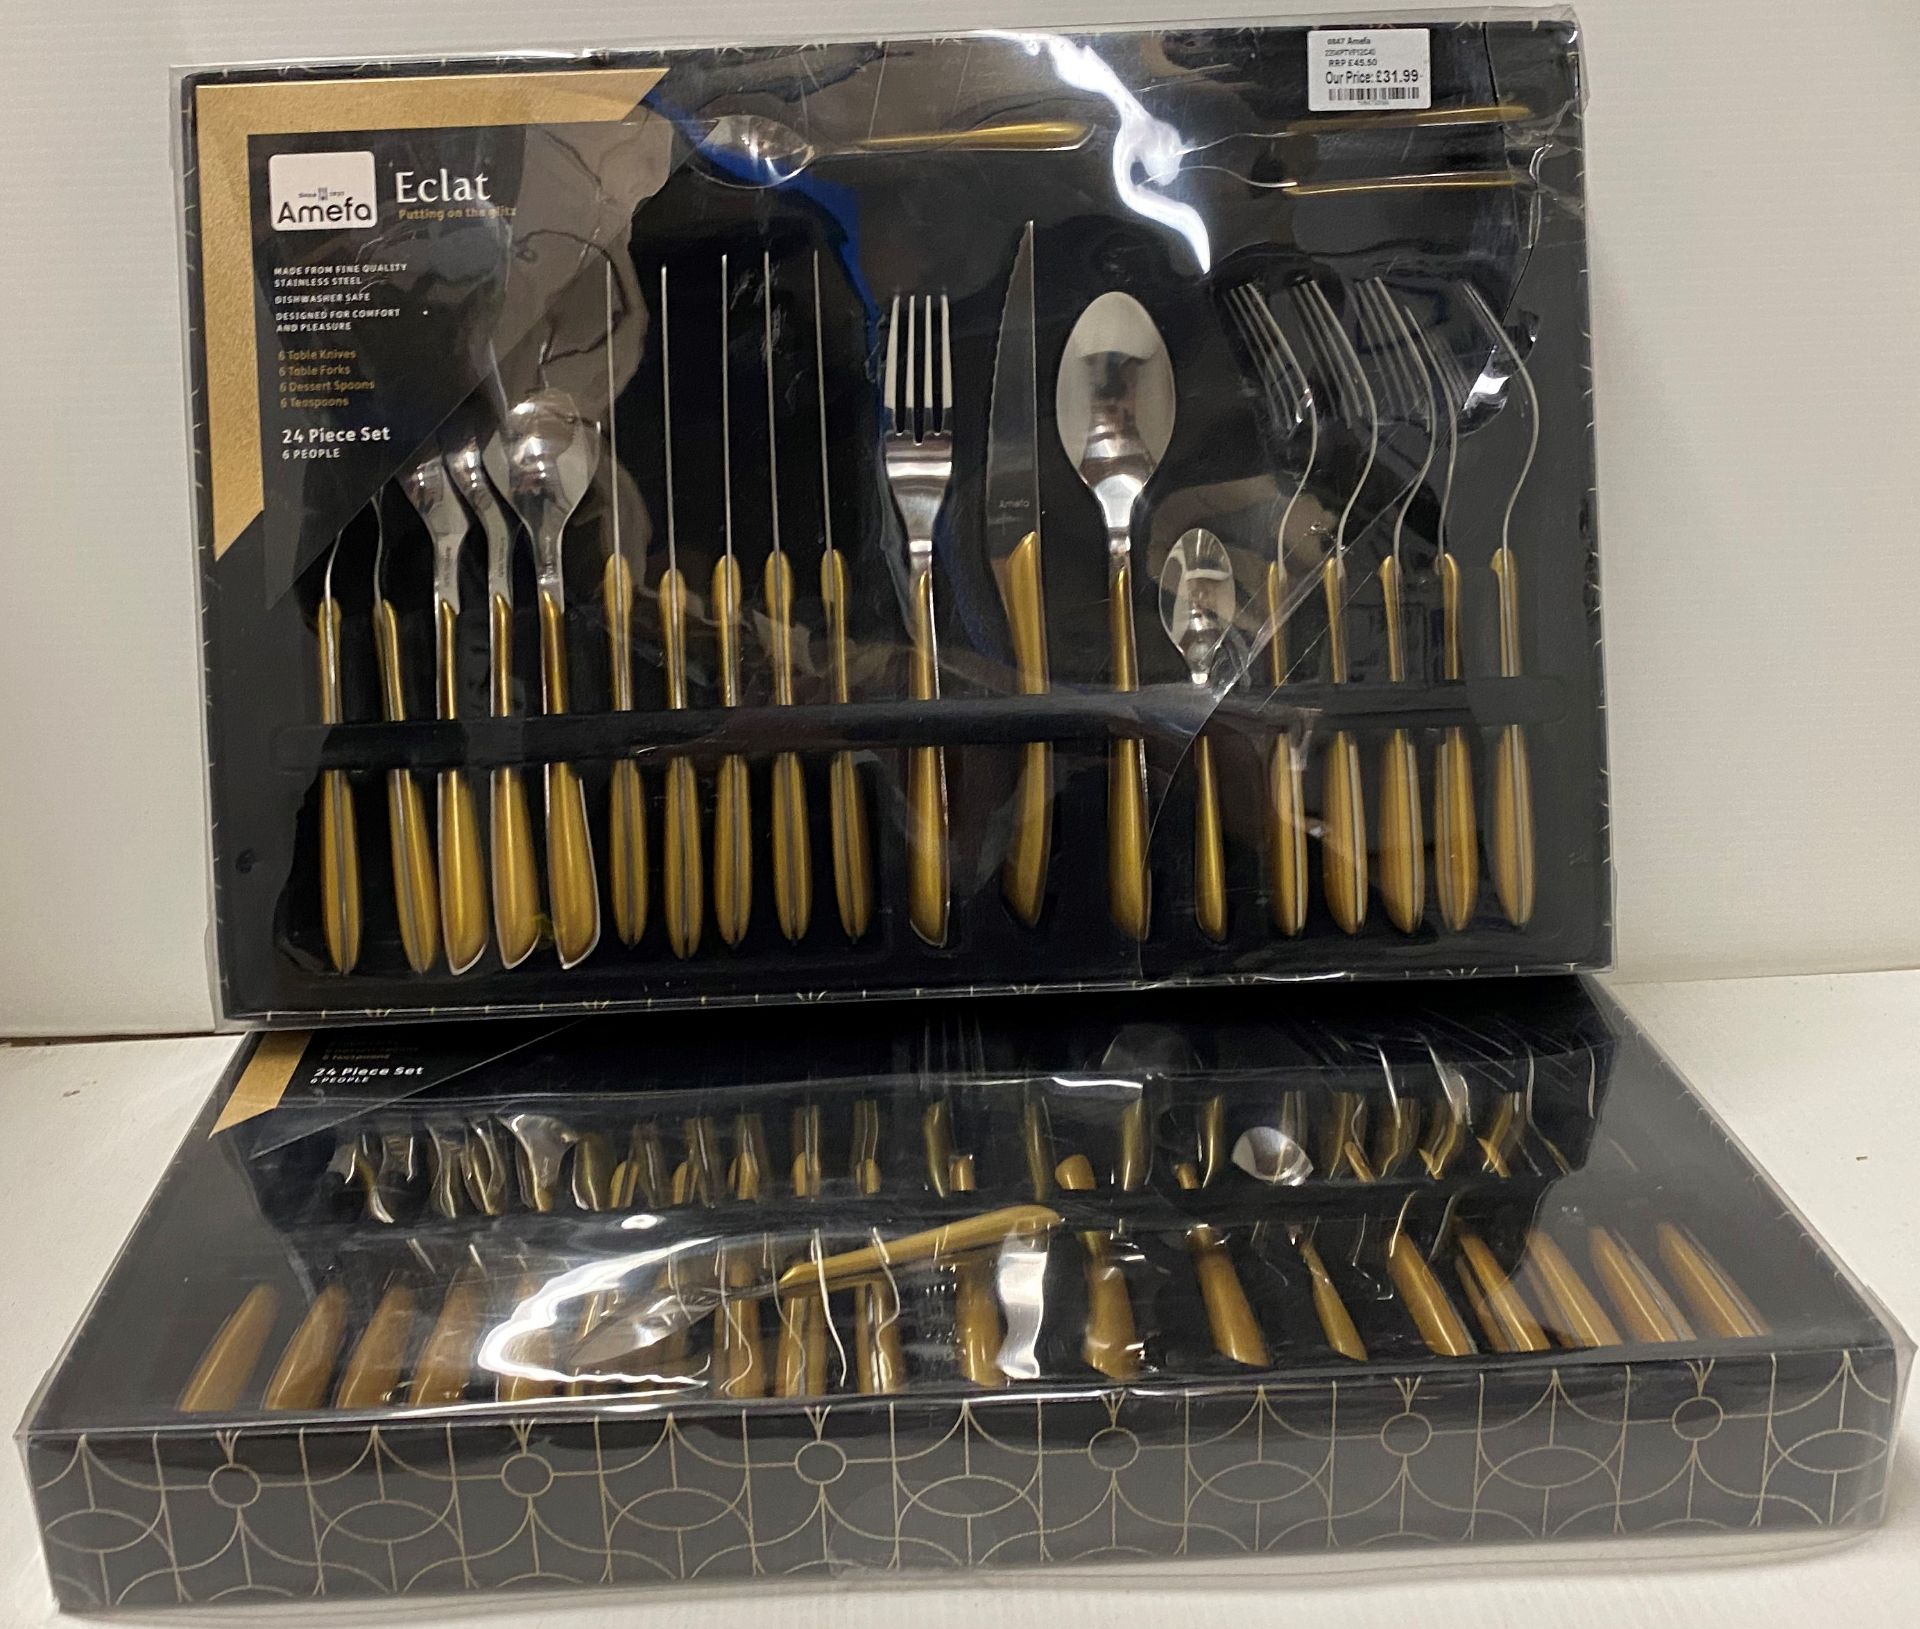 2 x Amefa Eclat Gold 24 piece cutlery sets RRP £45.